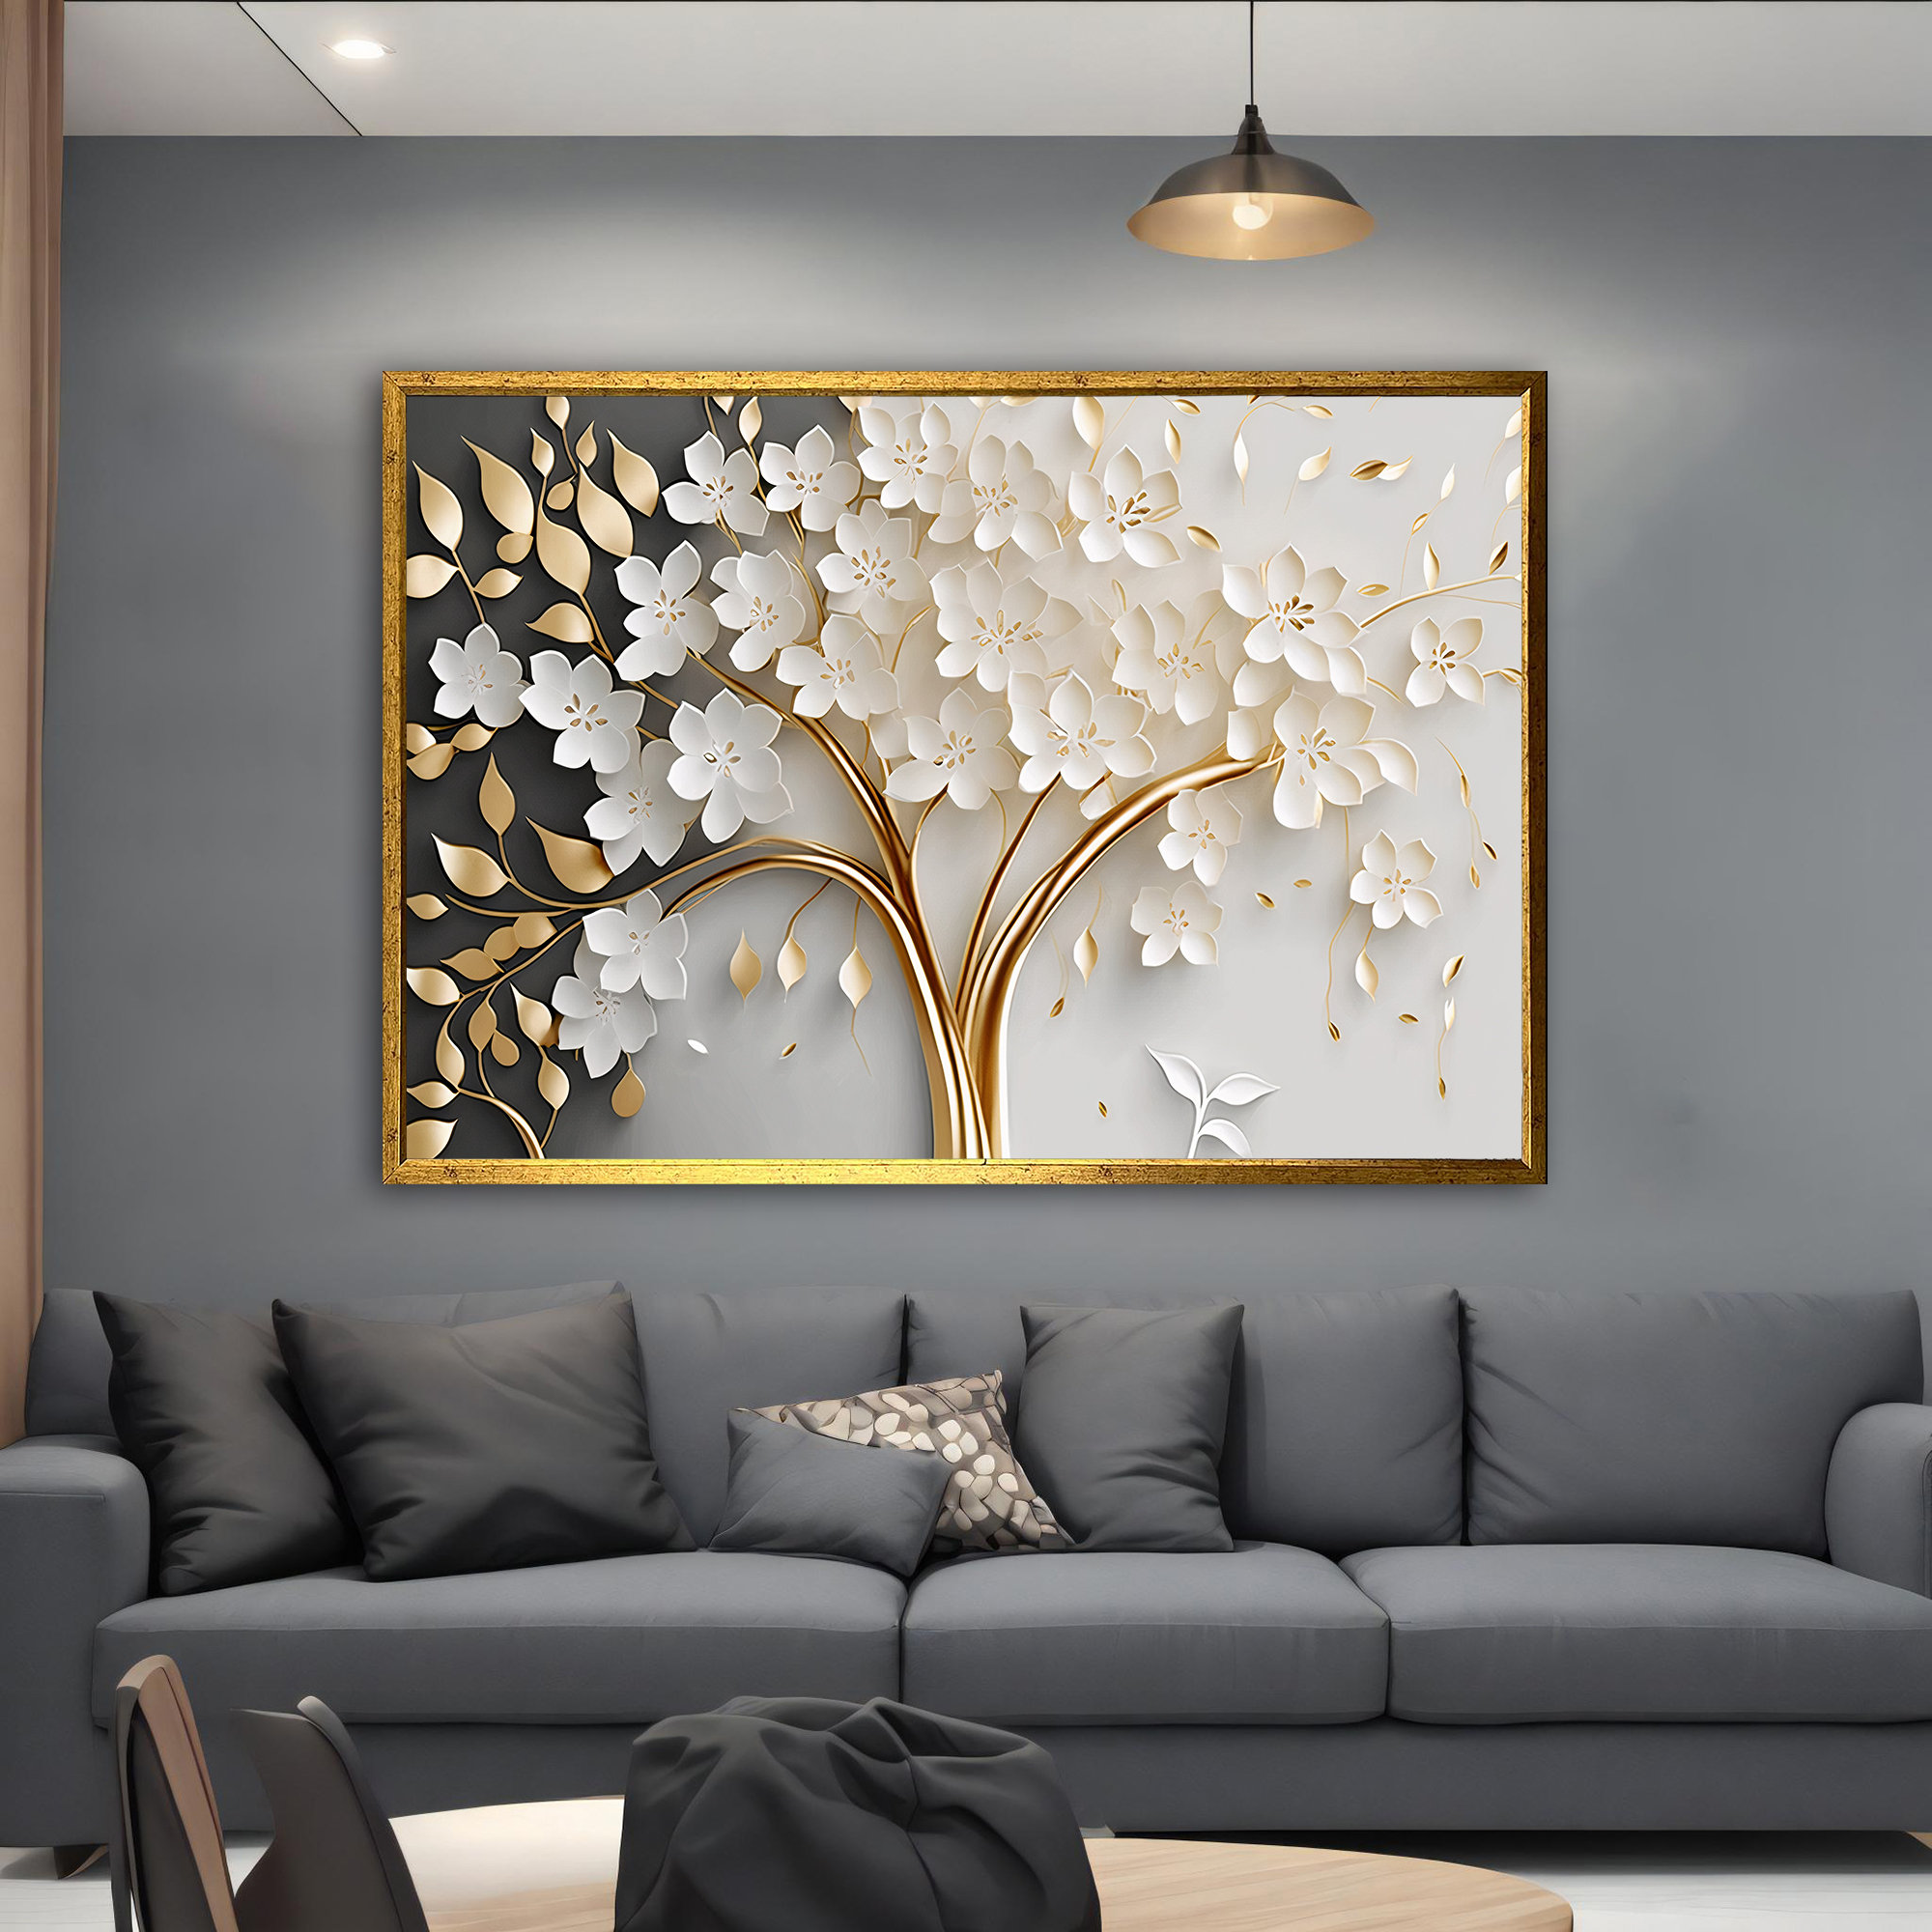 3D Gold Flowers in Vase Metal Wall Art Set, Wall Hangings, Unique Wall Decor,  Metal Wall Art, Living Room Decor, Home Decor Artwork 